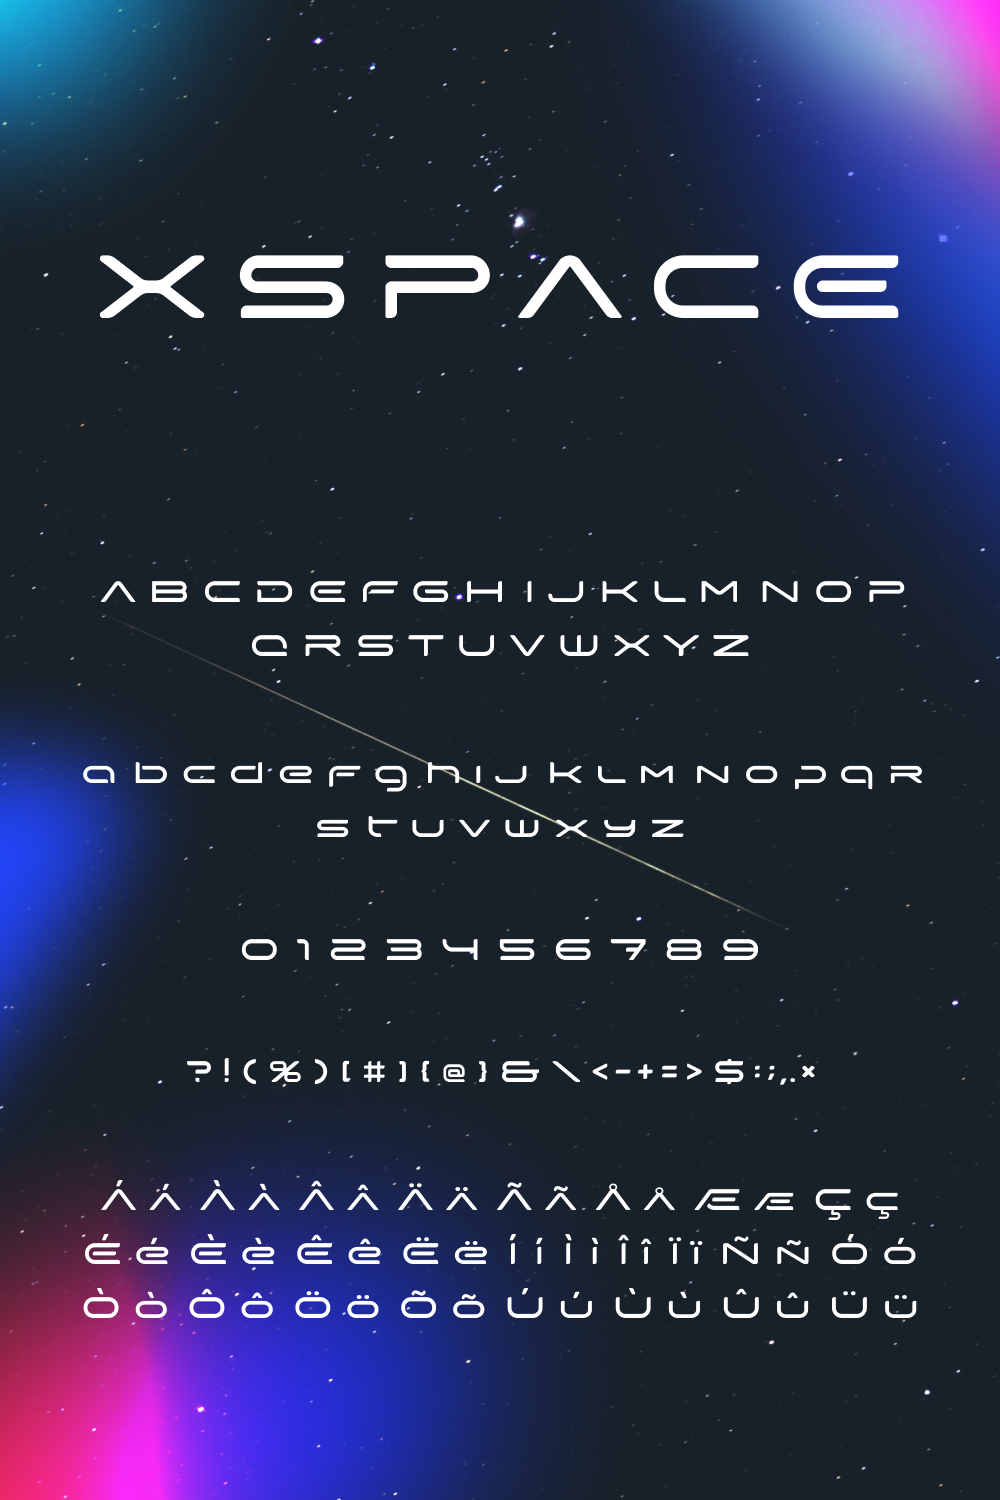 Xspace font of pinterest.